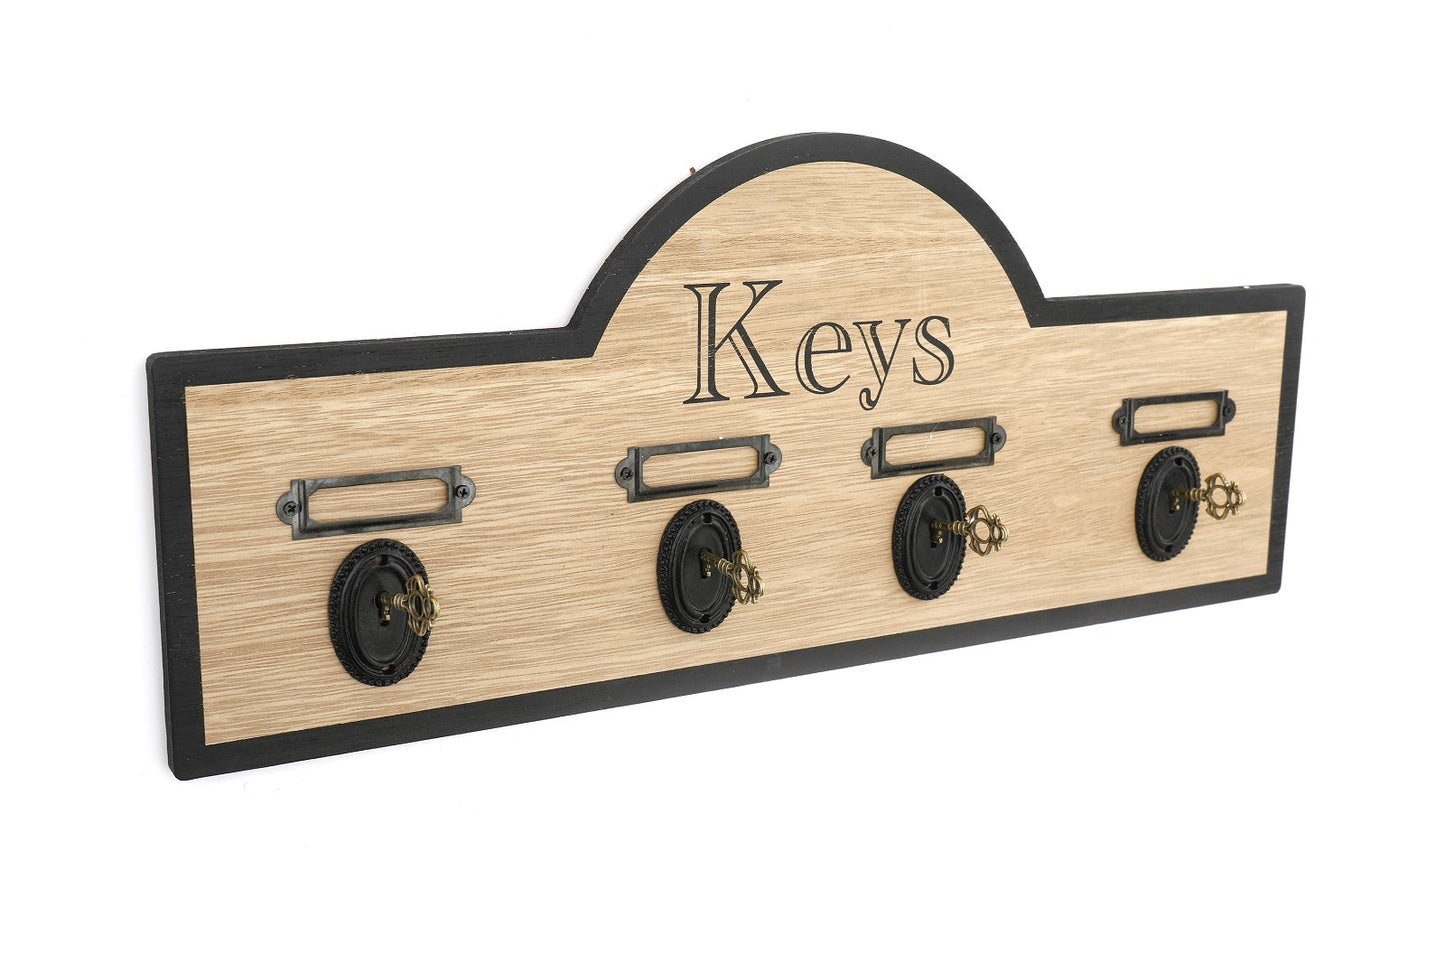 Wooden Board With 4 Key Design Hooks